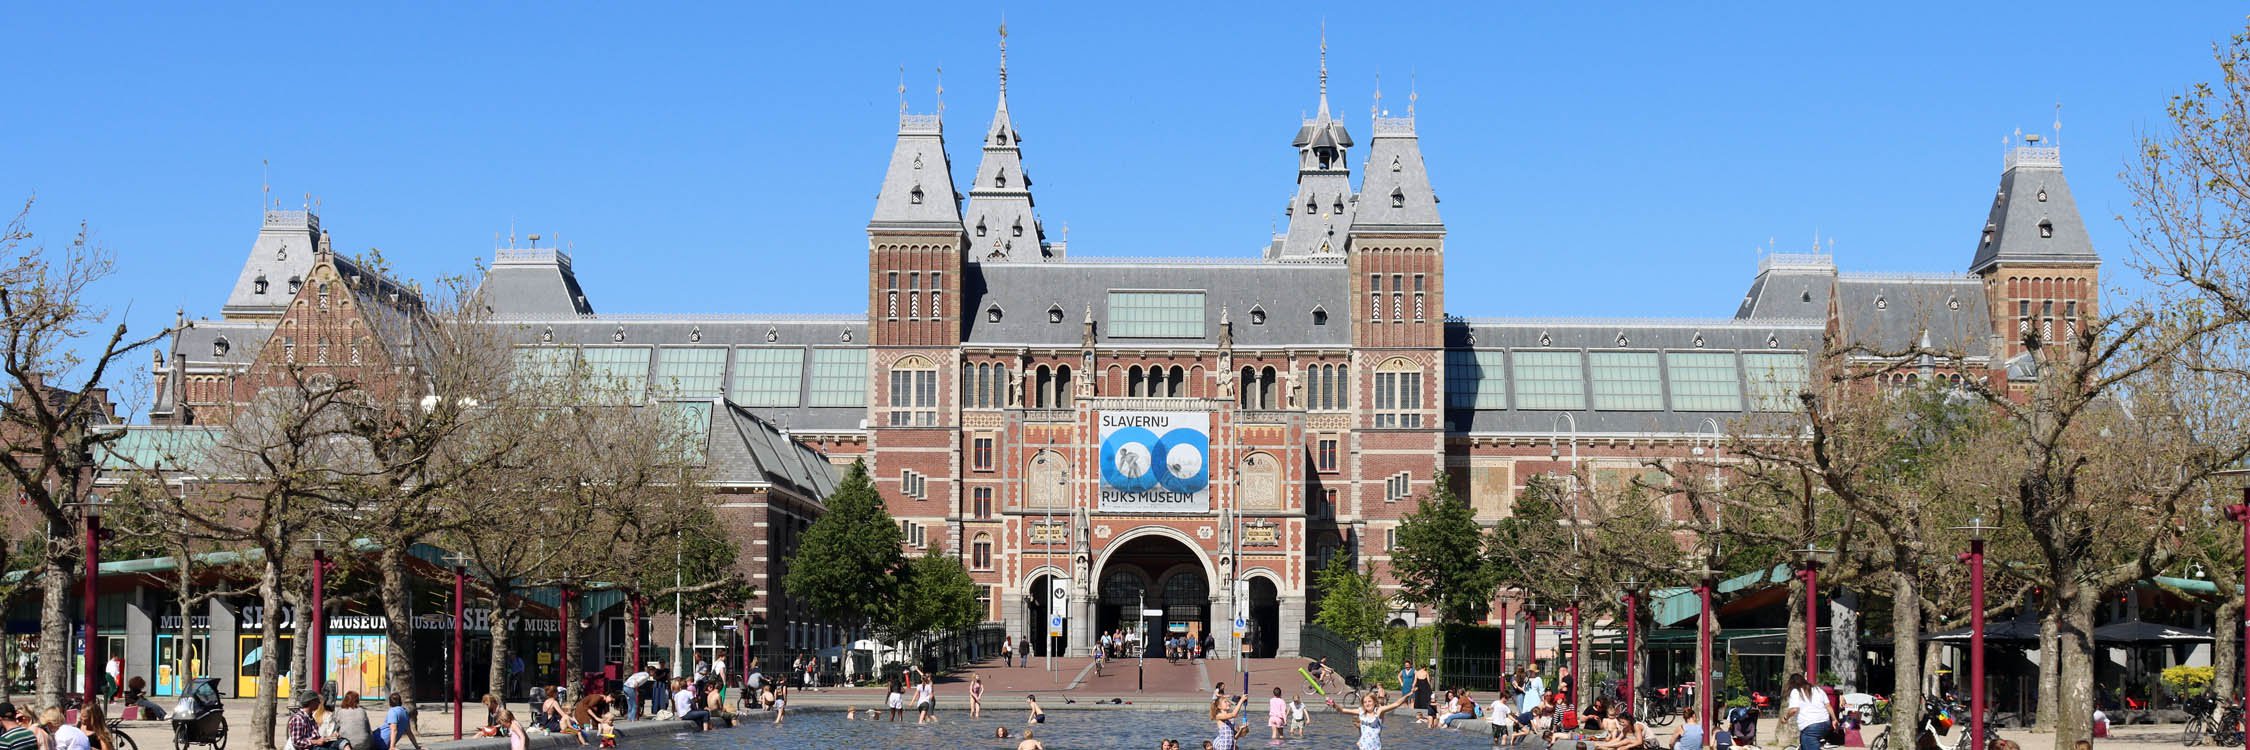 Amsterdam Rijksmuseum.jpg